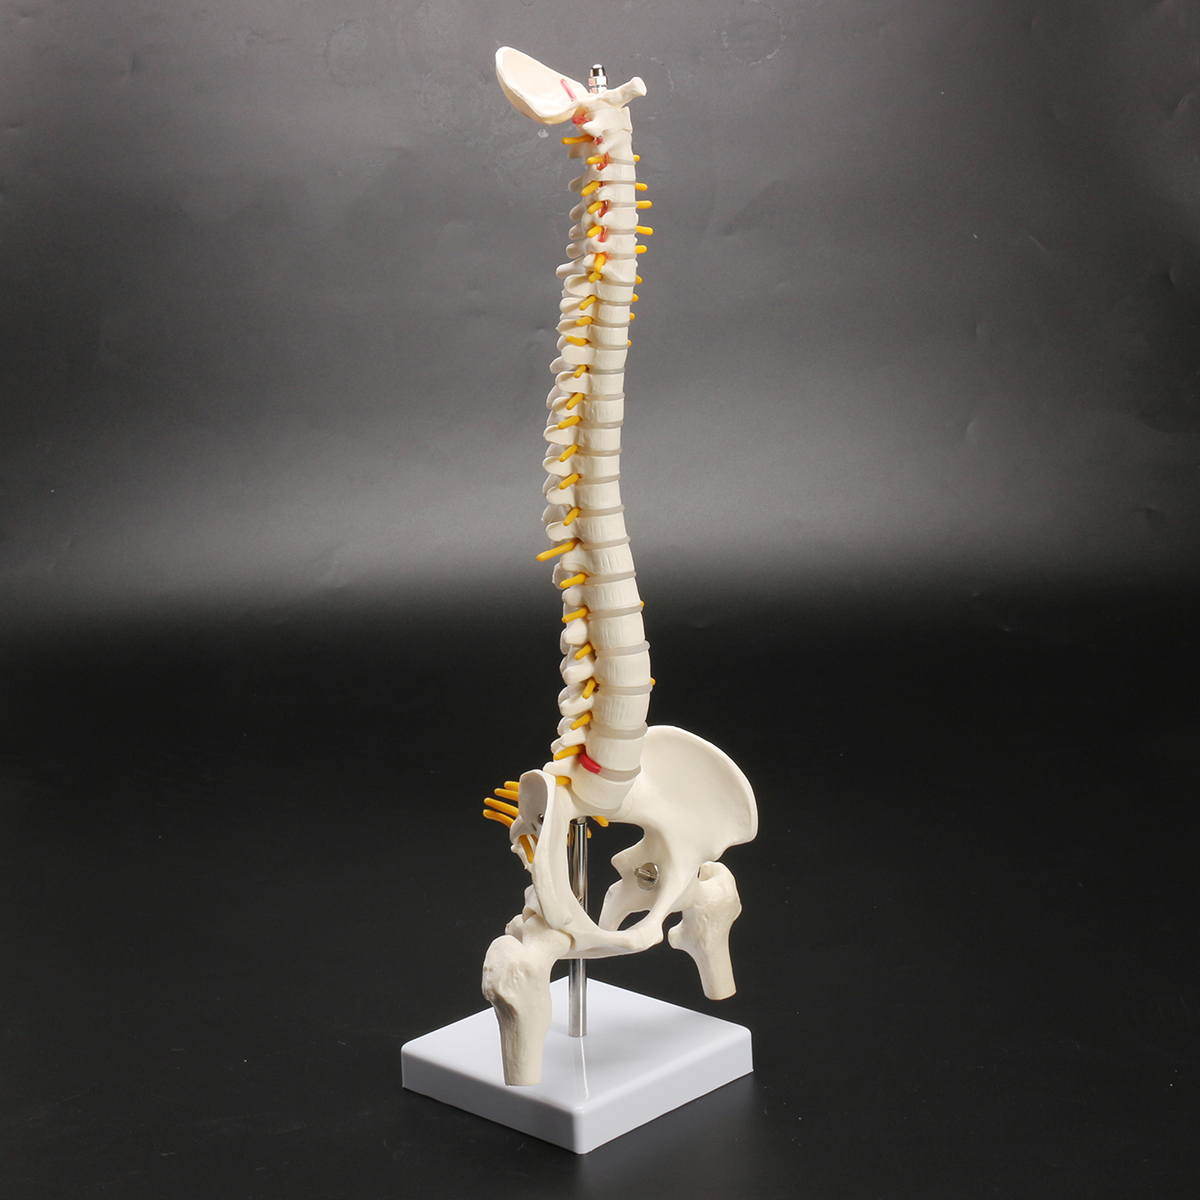 45cm-177quot-Spine-Medical-Model-With-Pelvis-Femur-Heads-12-Life-Lab-Equipment-1620821-5